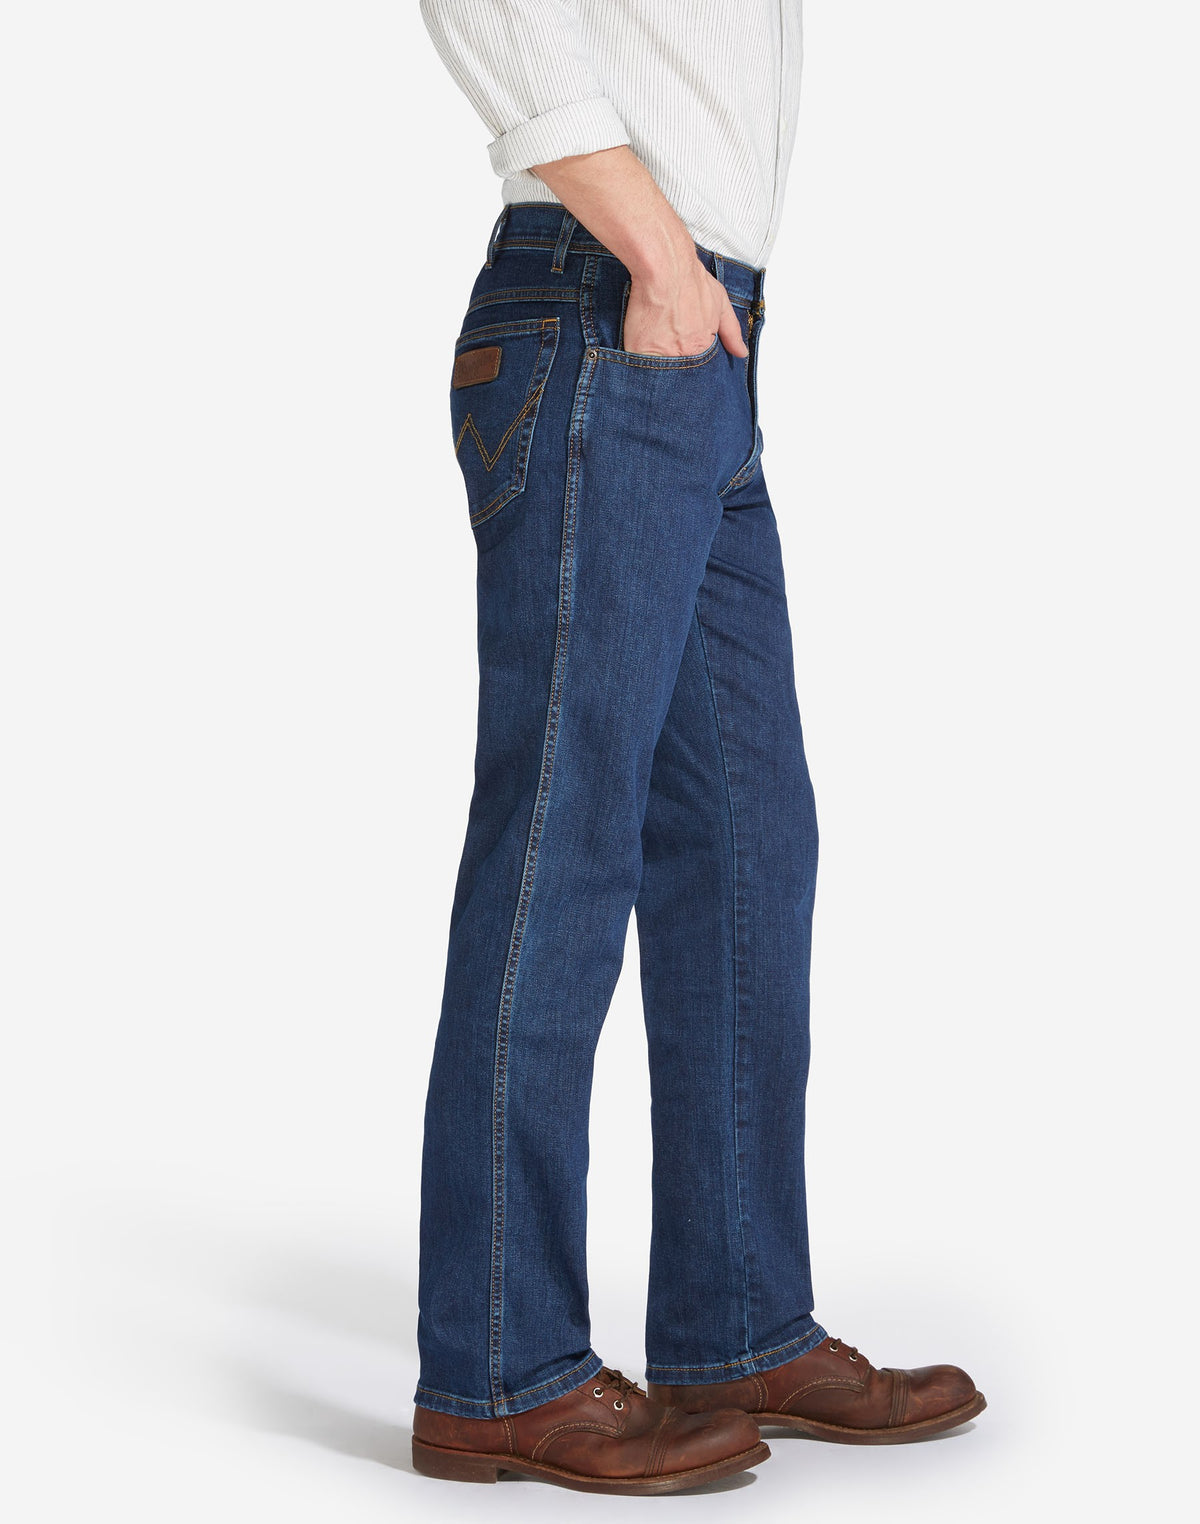 Mens Wrangler 'Texas' Jeans - Denim Stretch - Original Straight Fit, 02, W121-Core, Darkstone